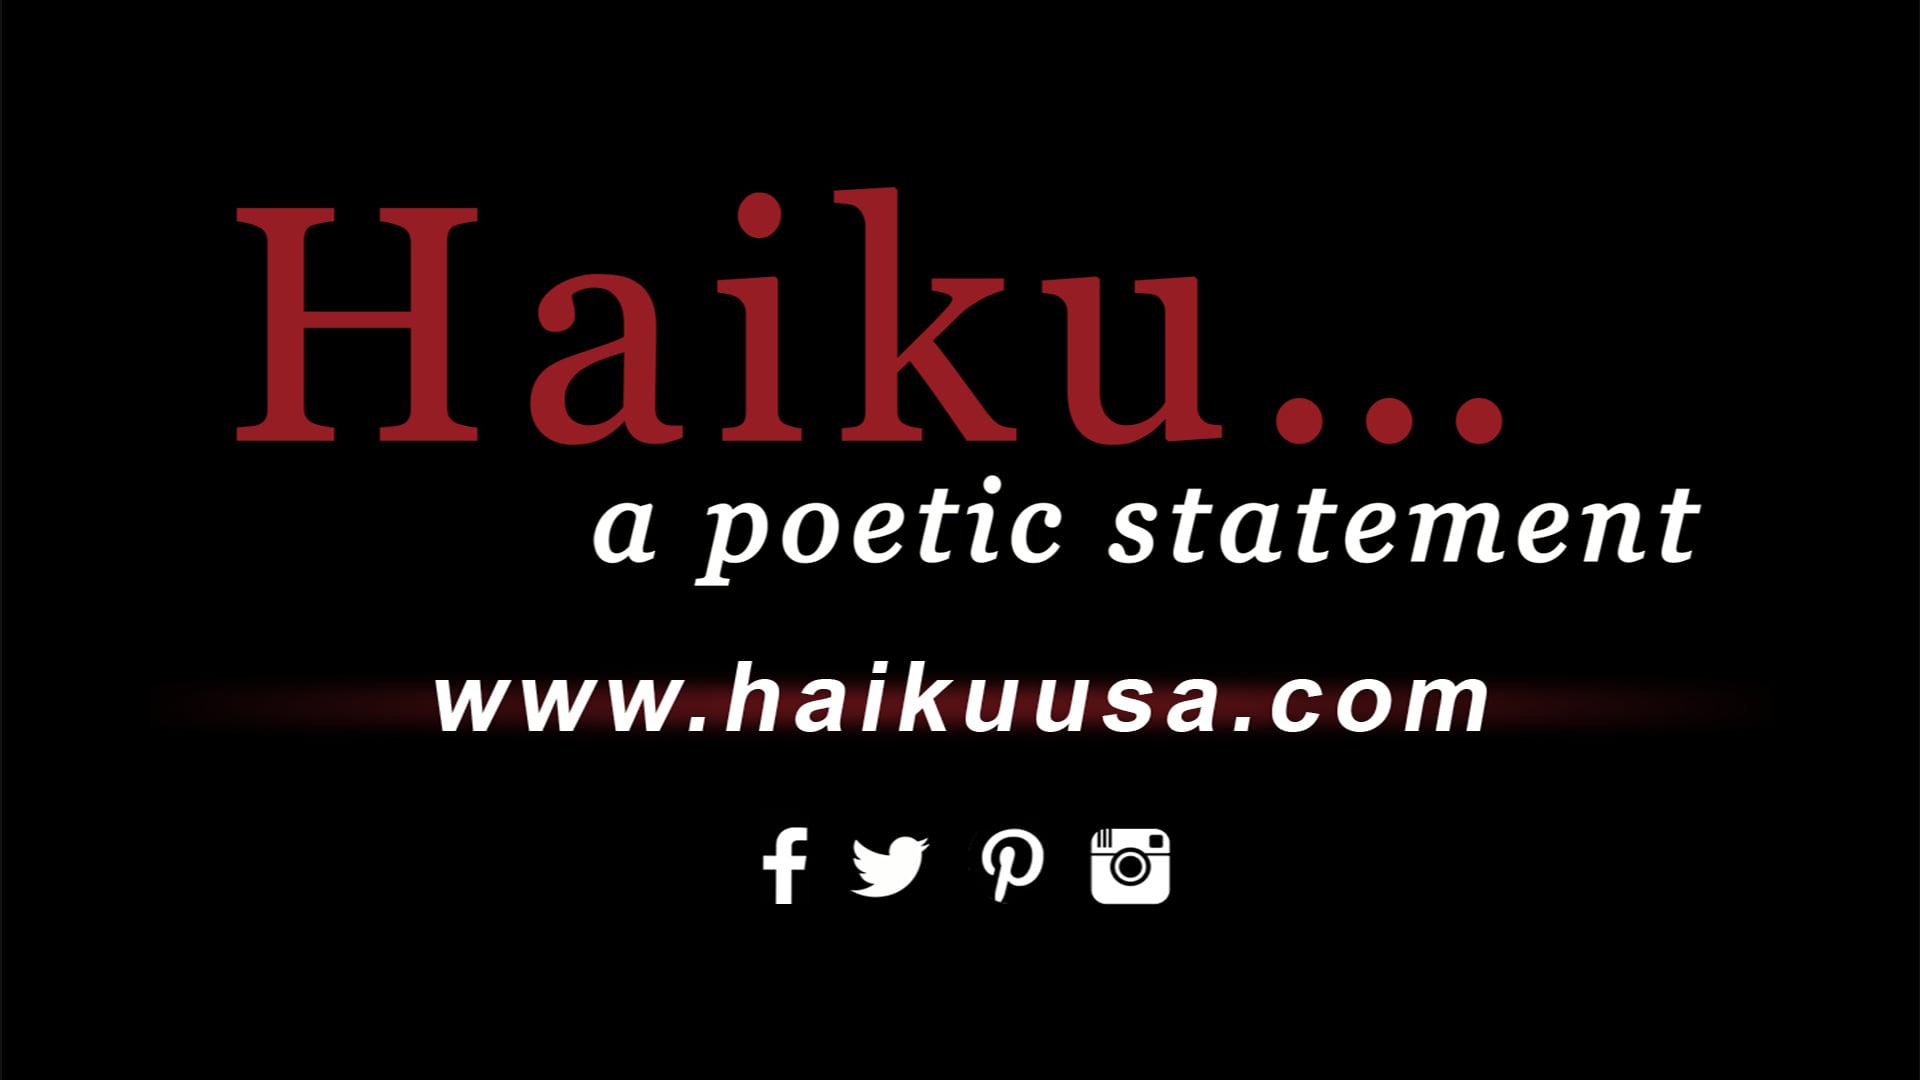 Haiku. . . a poetic statement